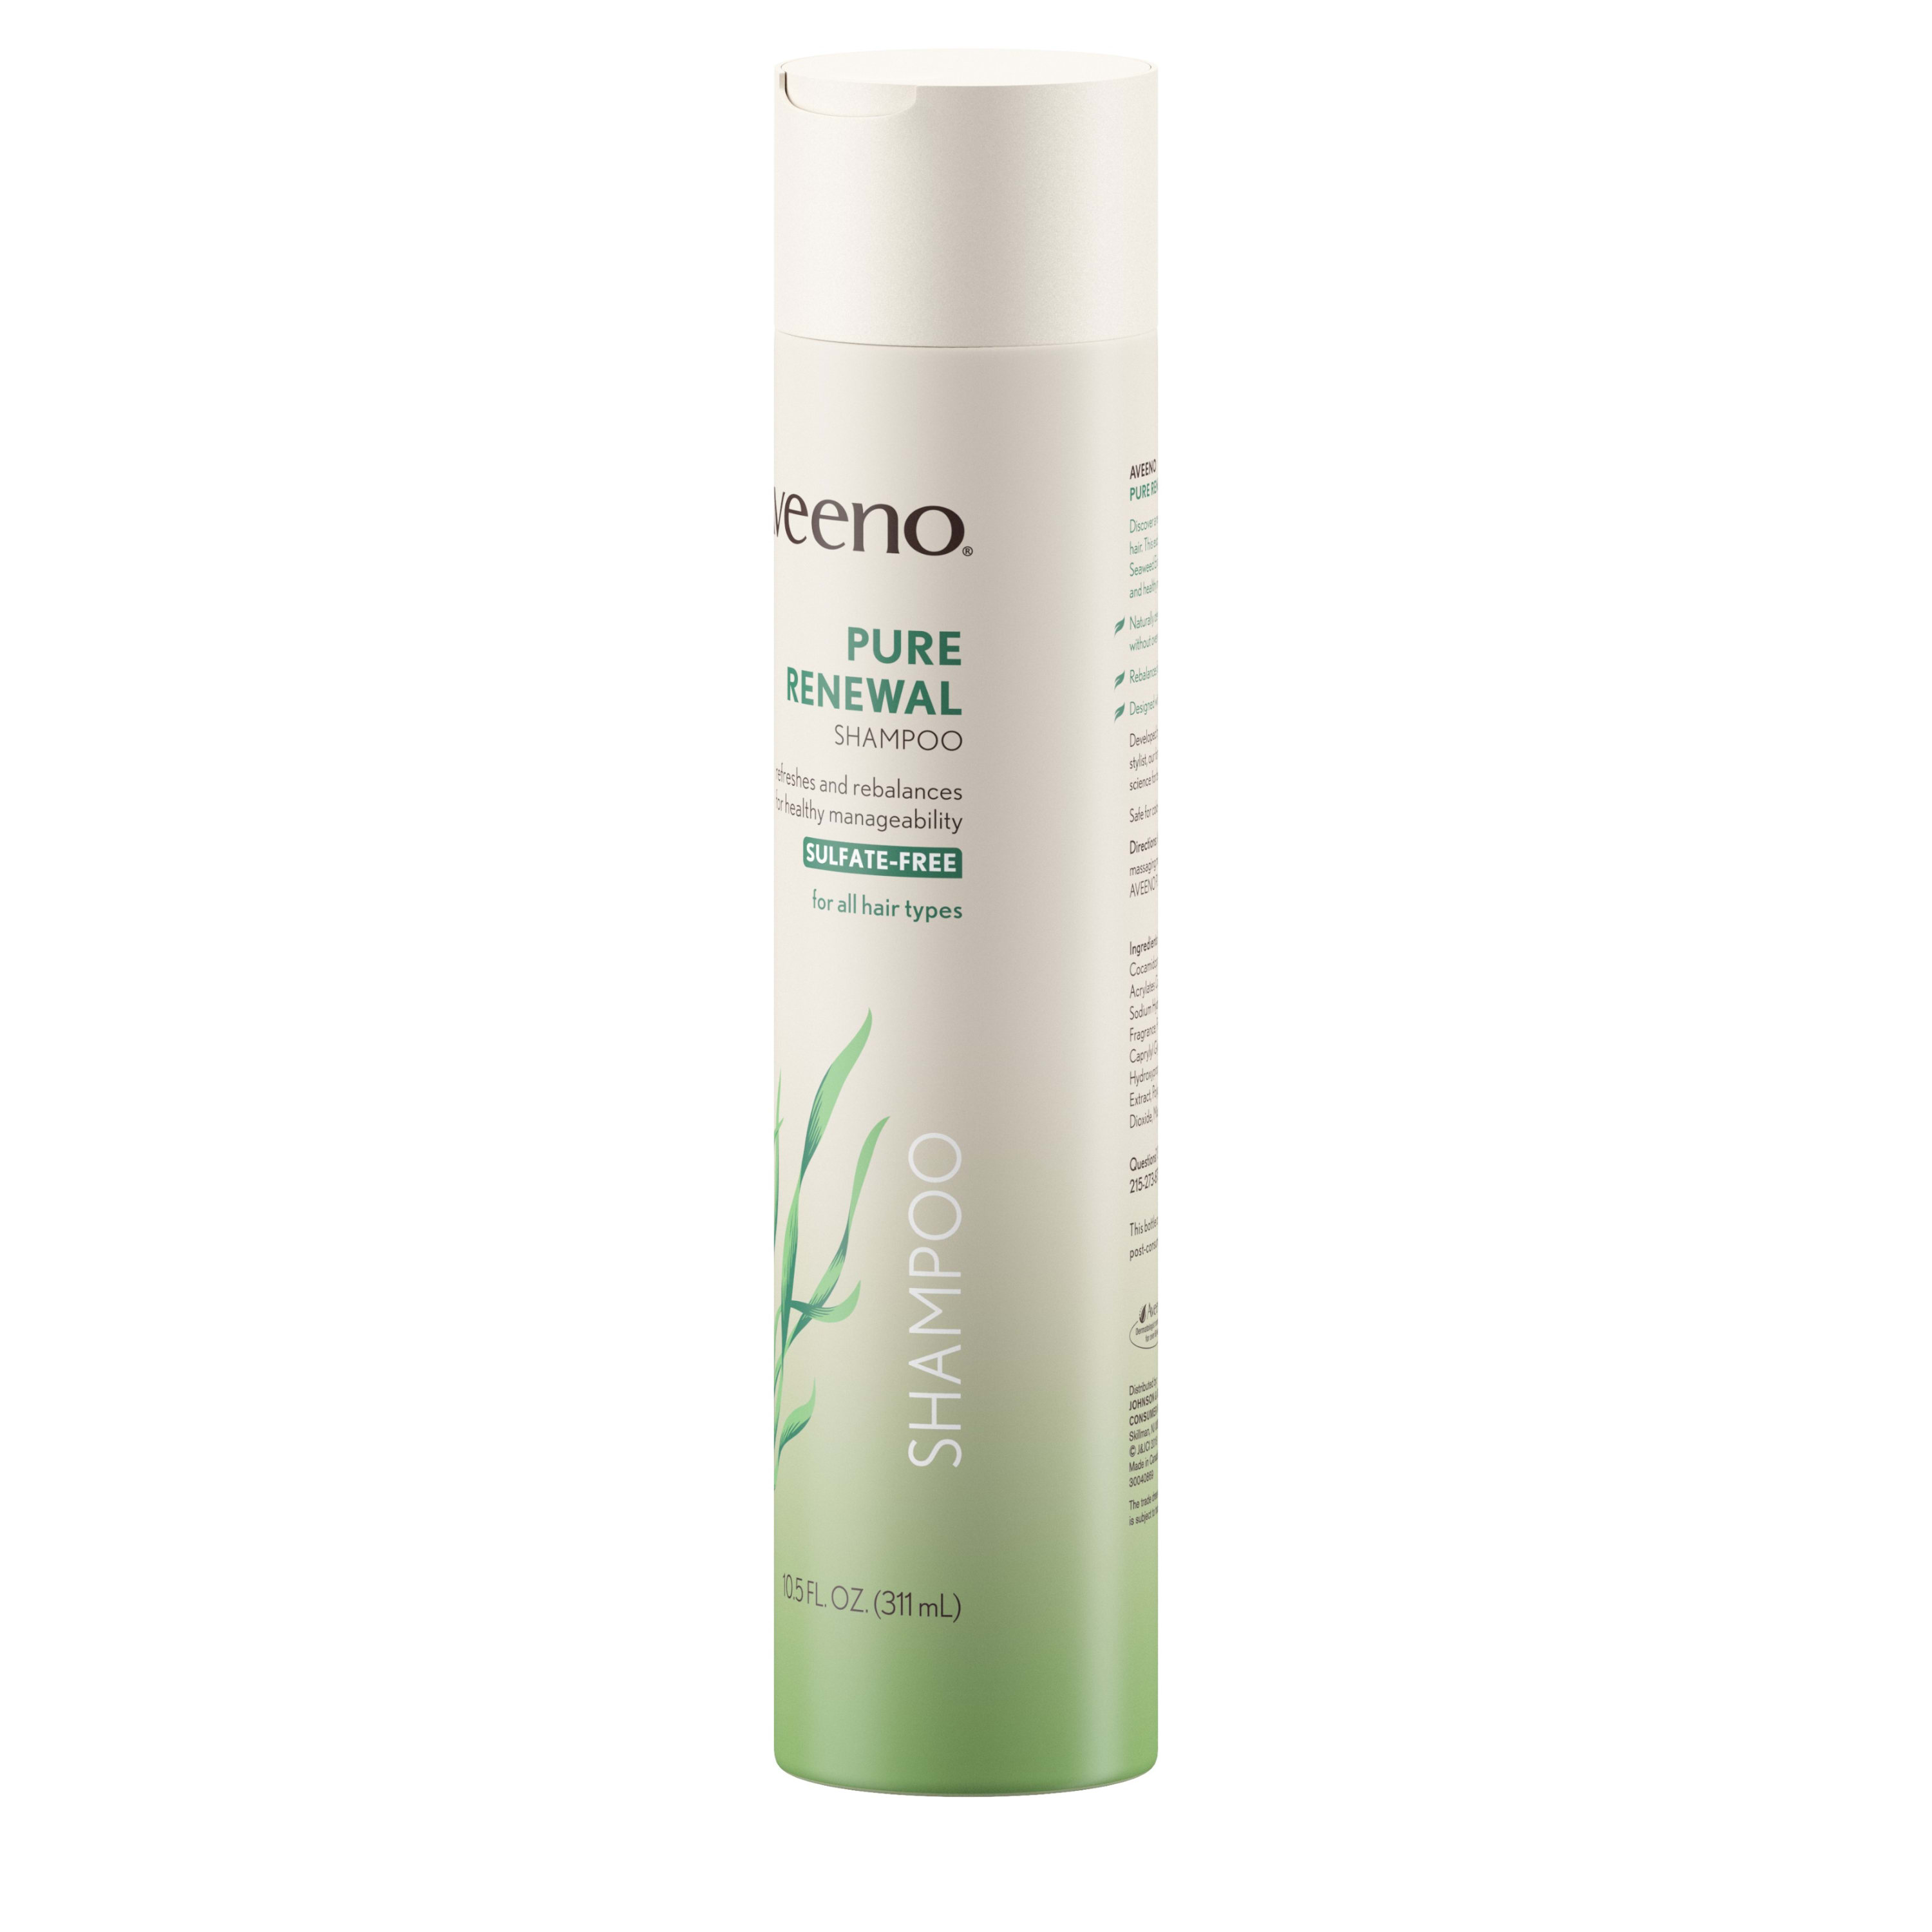 Aveeno Active Naturals Pure Renewal Moisturizing Daily Shampoo with Seaweed Extract, 10.5 fl oz - image 3 of 9